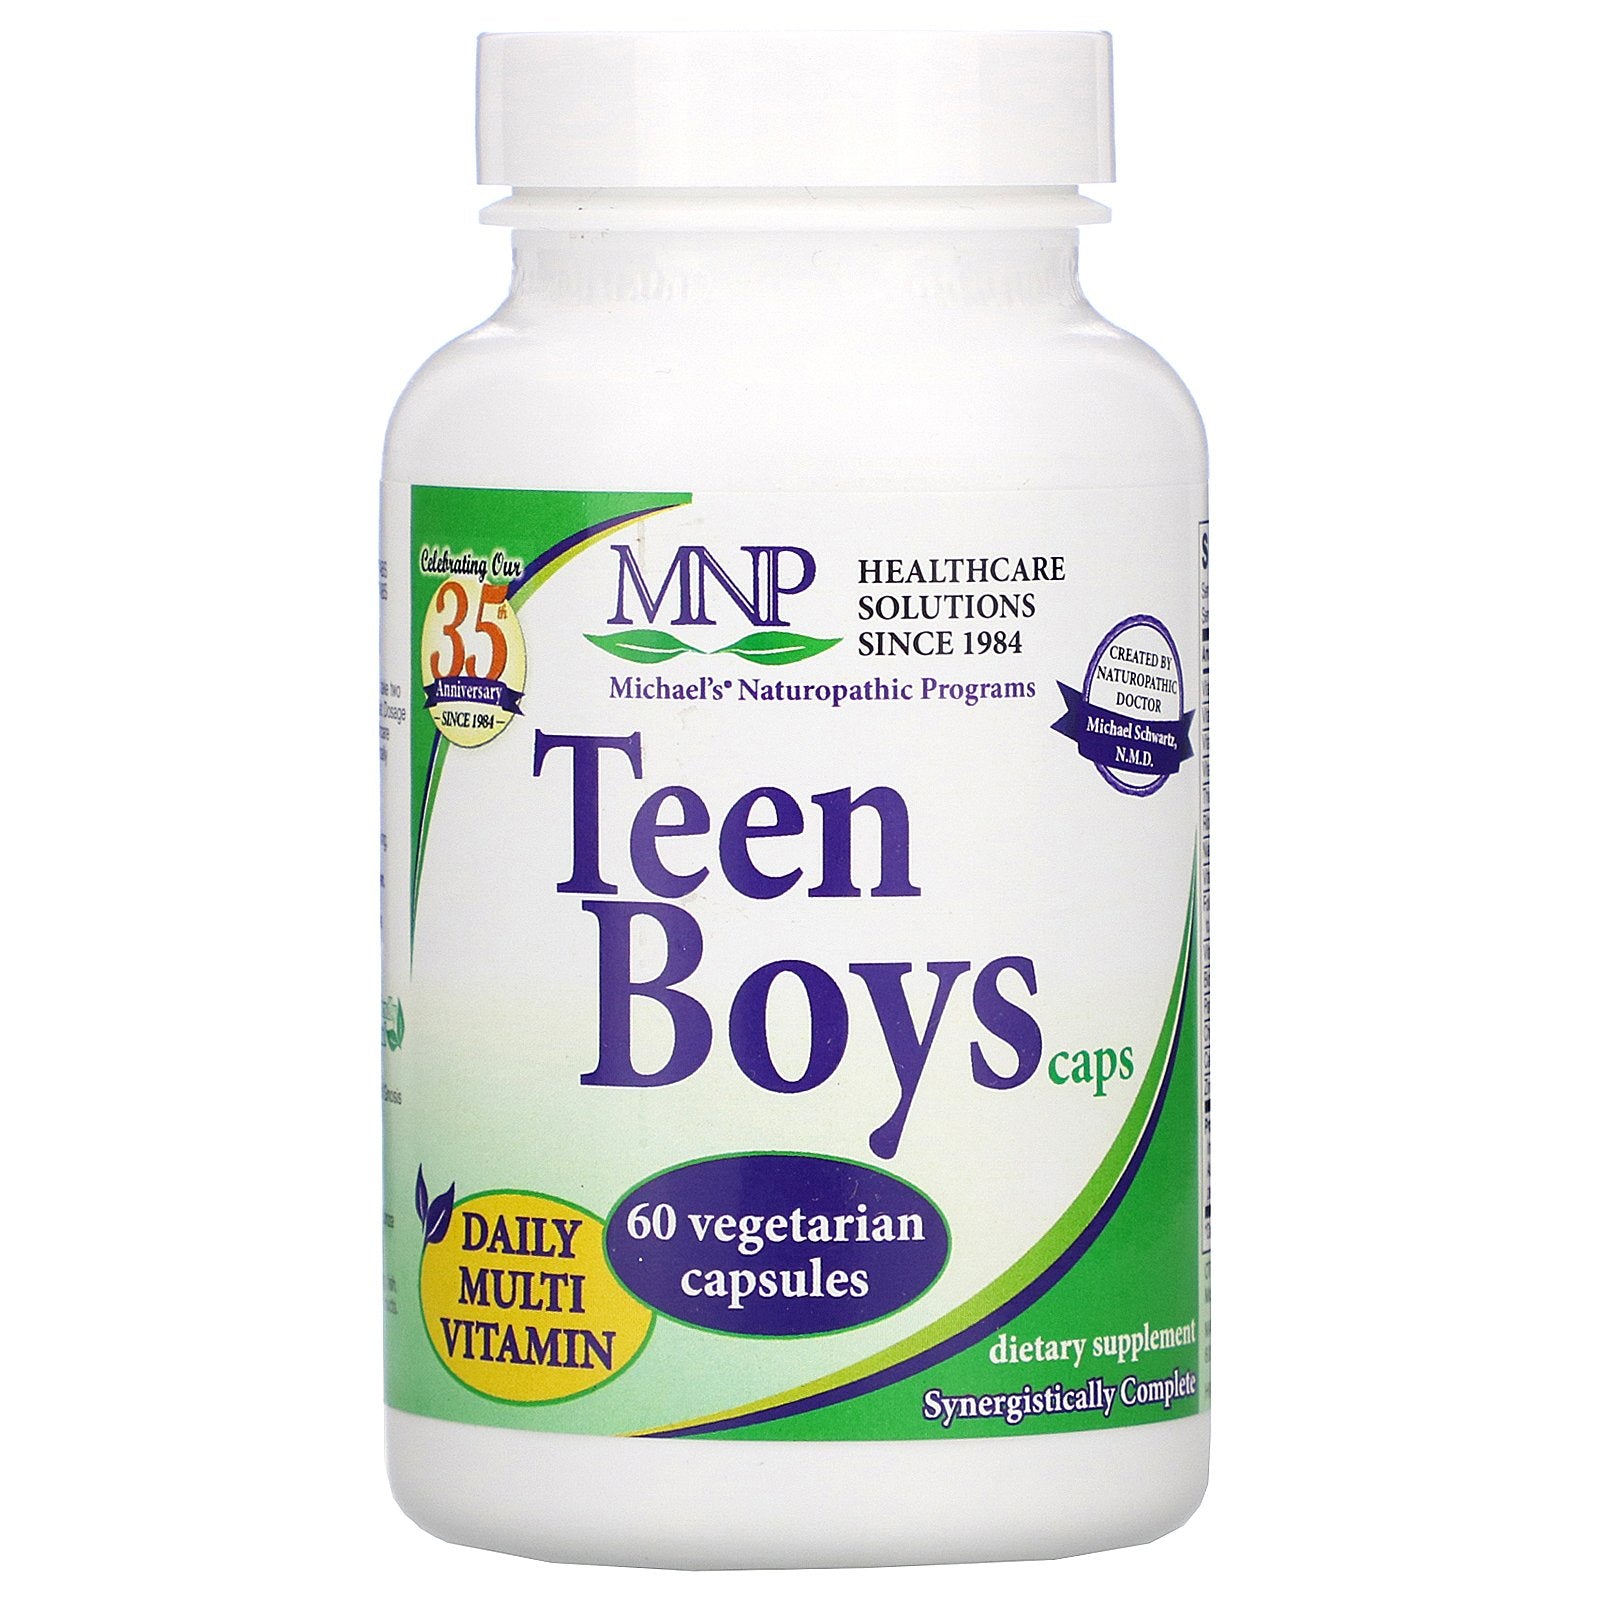 Michael's Naturopathic, Teen Boys Caps, Daily Multi-Vitamin, 60 Vegetarian Capsules